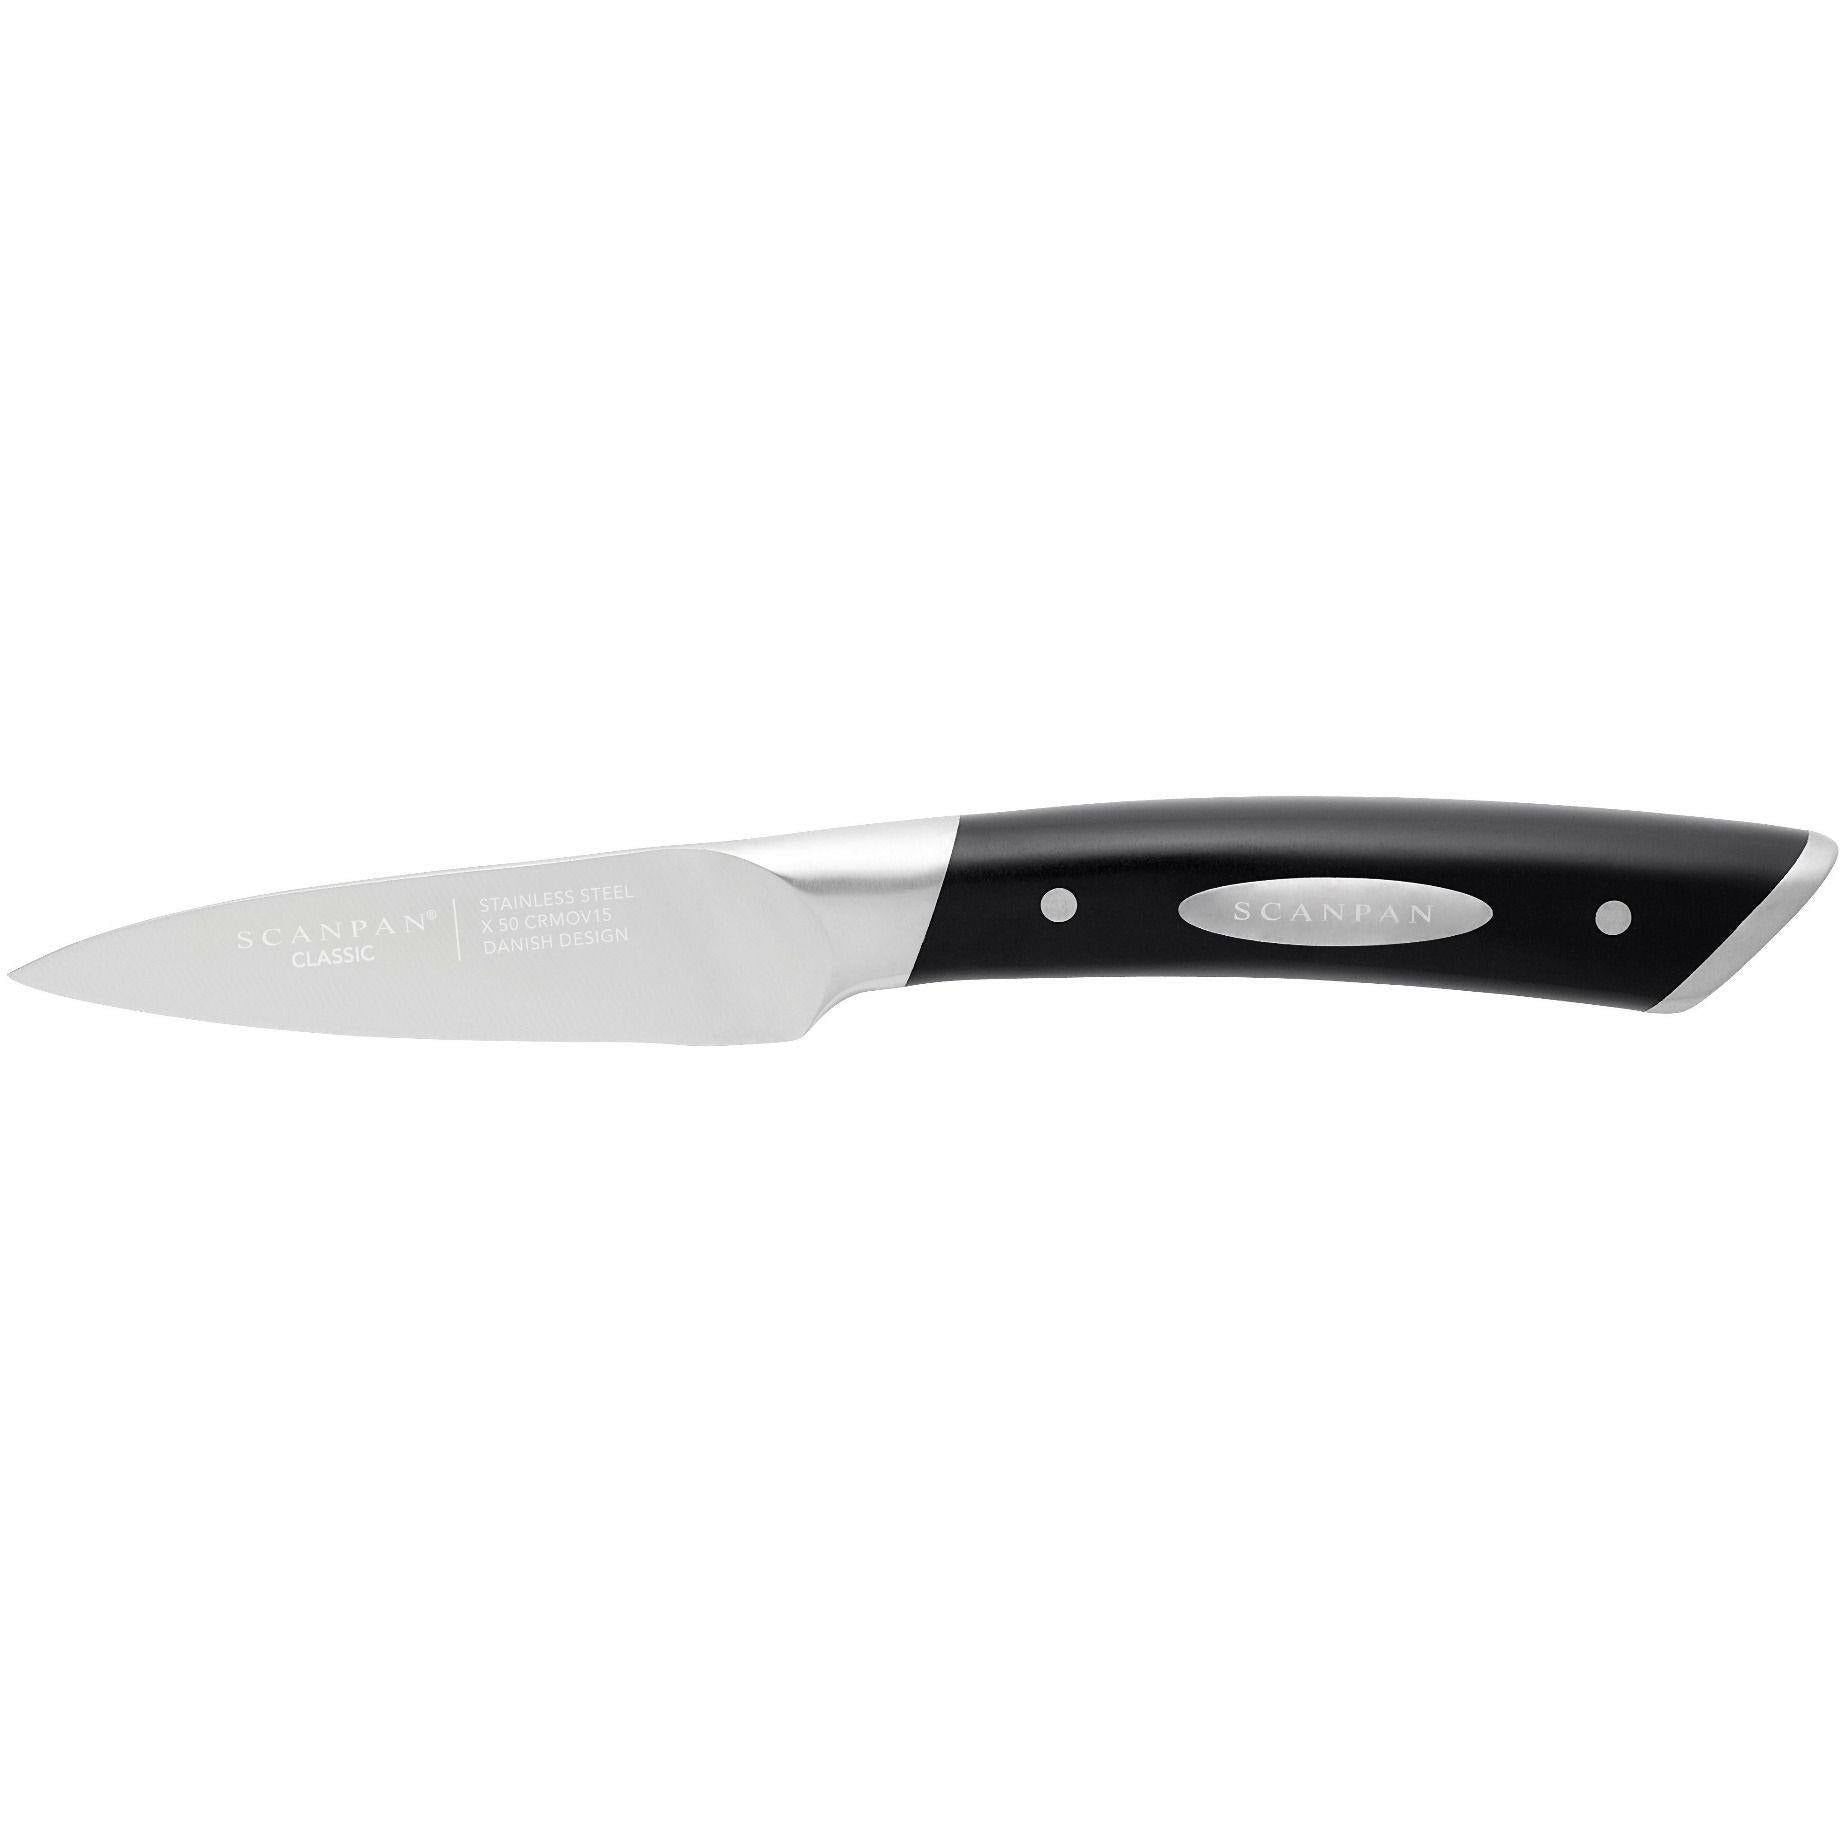 Scanpan 9cm Pairing Knife - New World